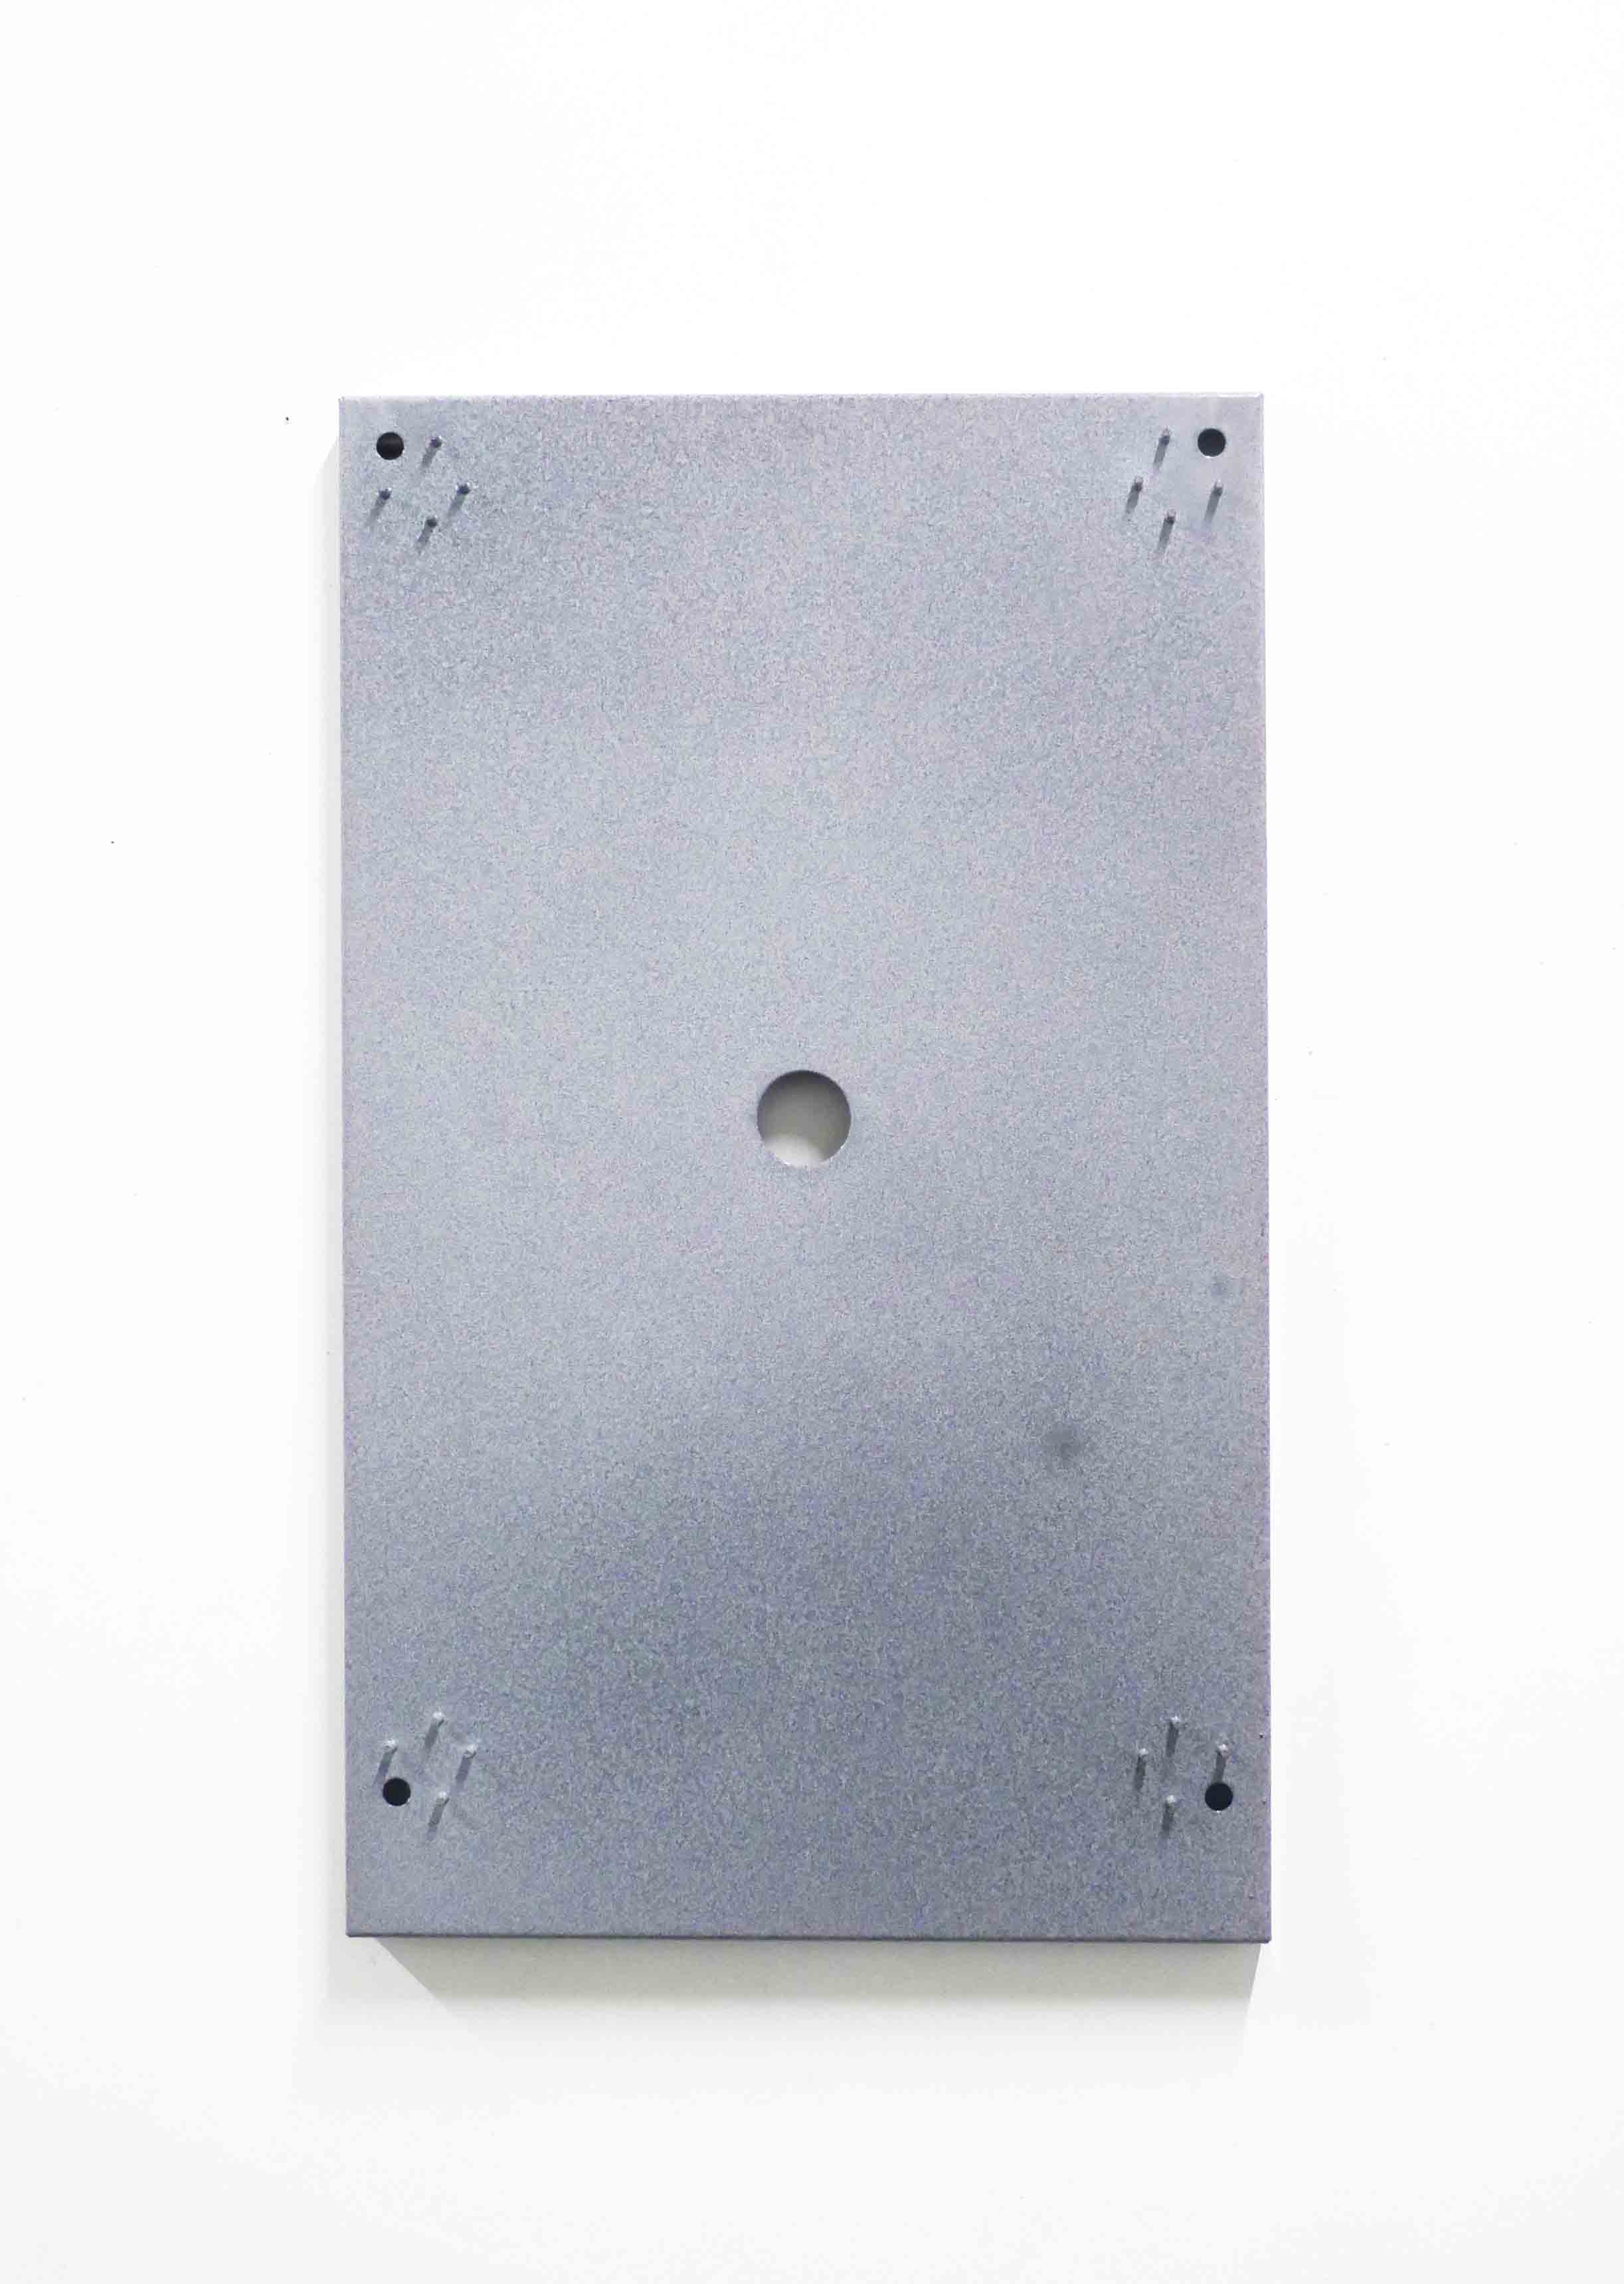 Untitled. Obsolete mild steel fabrications jig and powder coating. 83cm x 50cm x 4cm. 2022